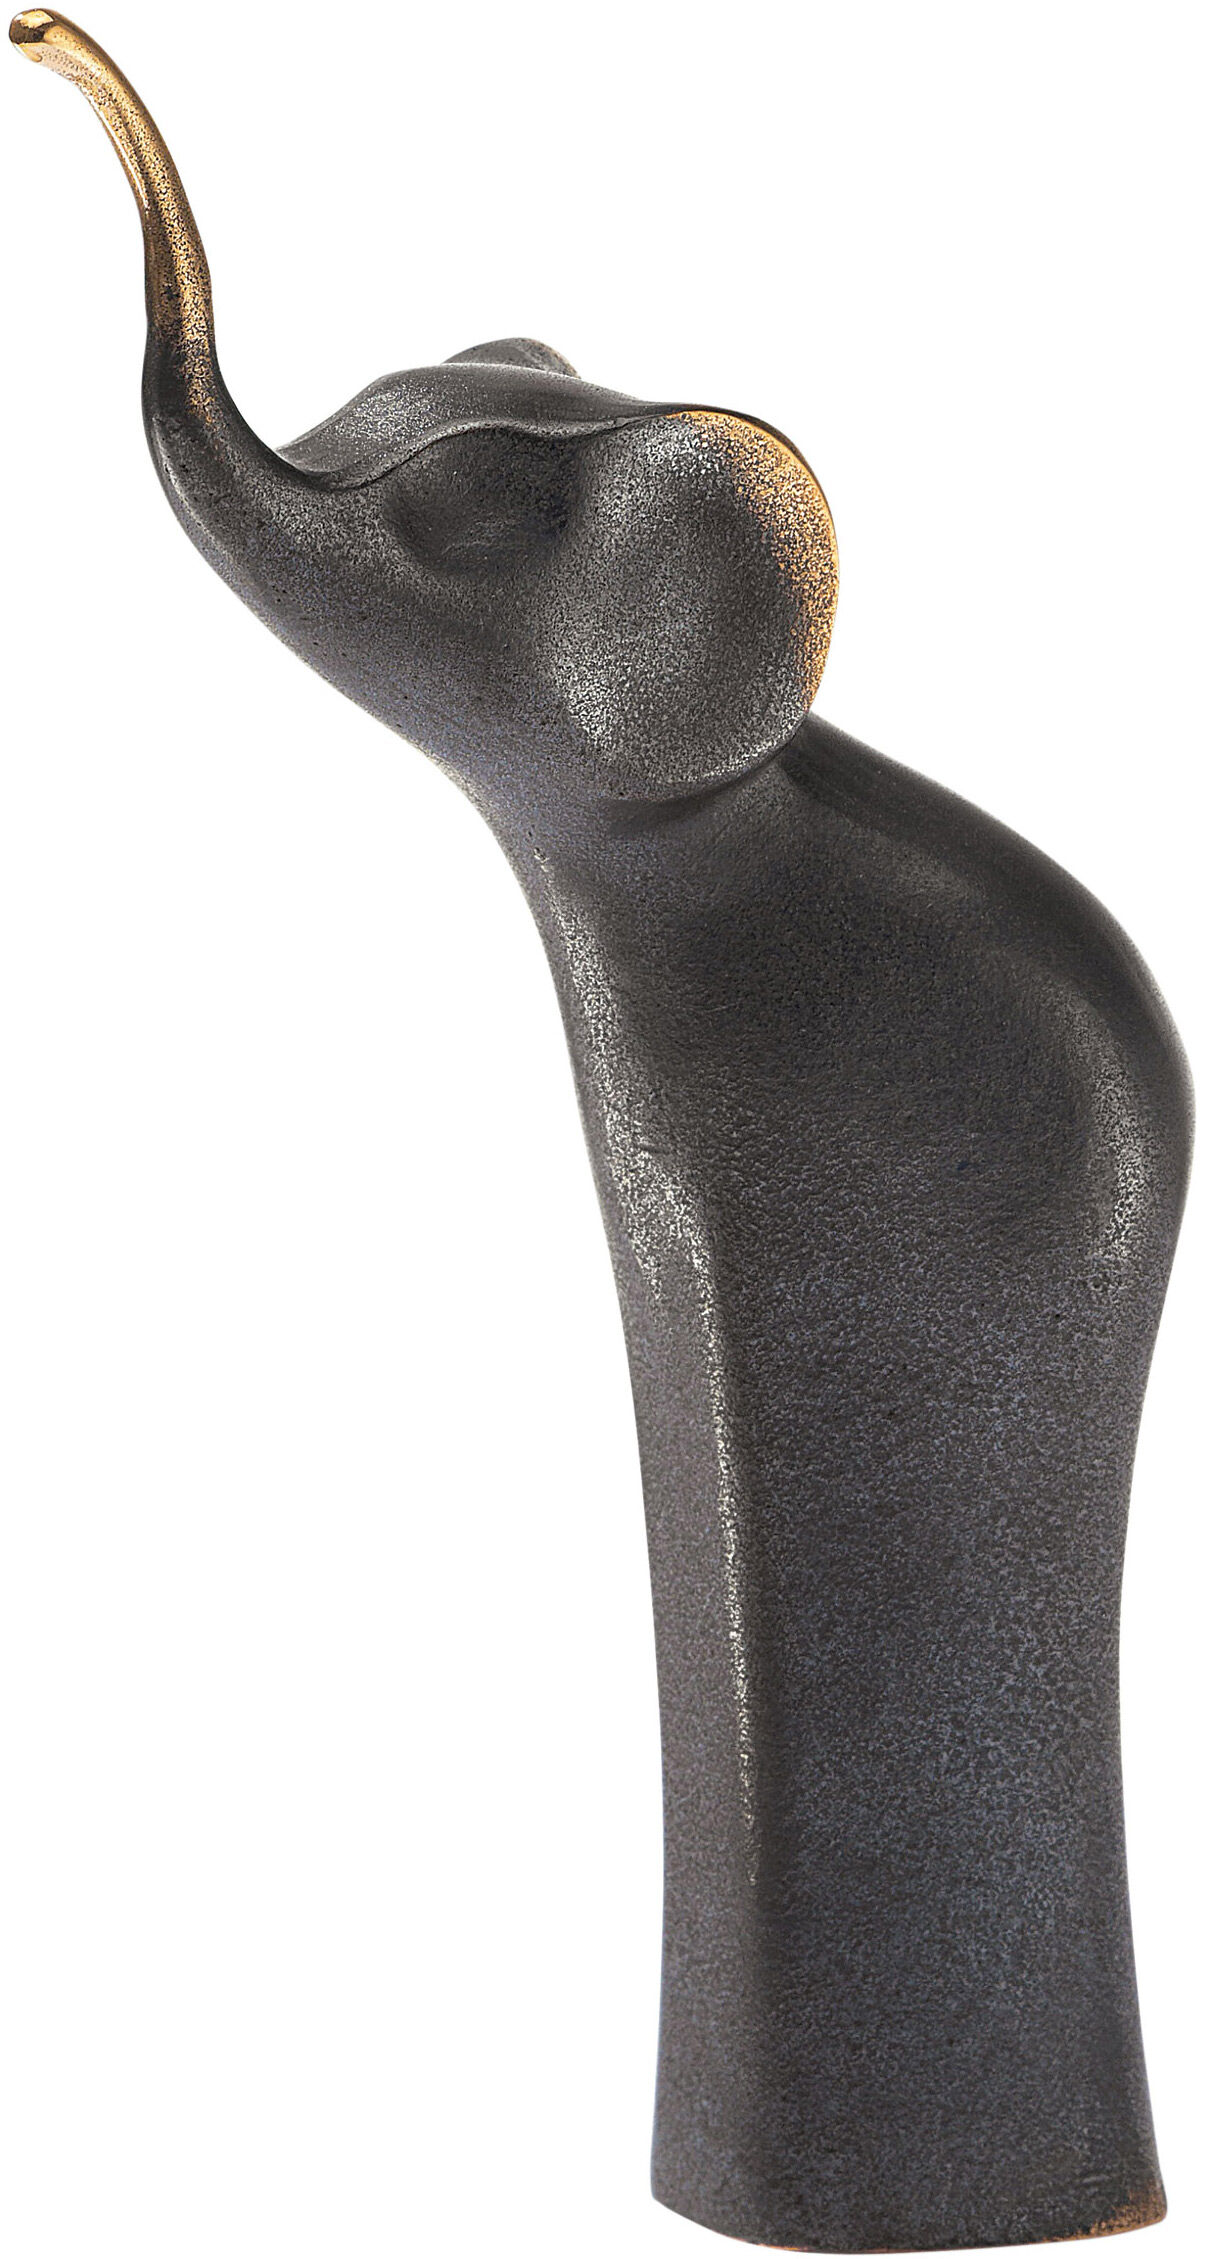 Sculpture animalière "Elephant", bronze von Kerstin Stark